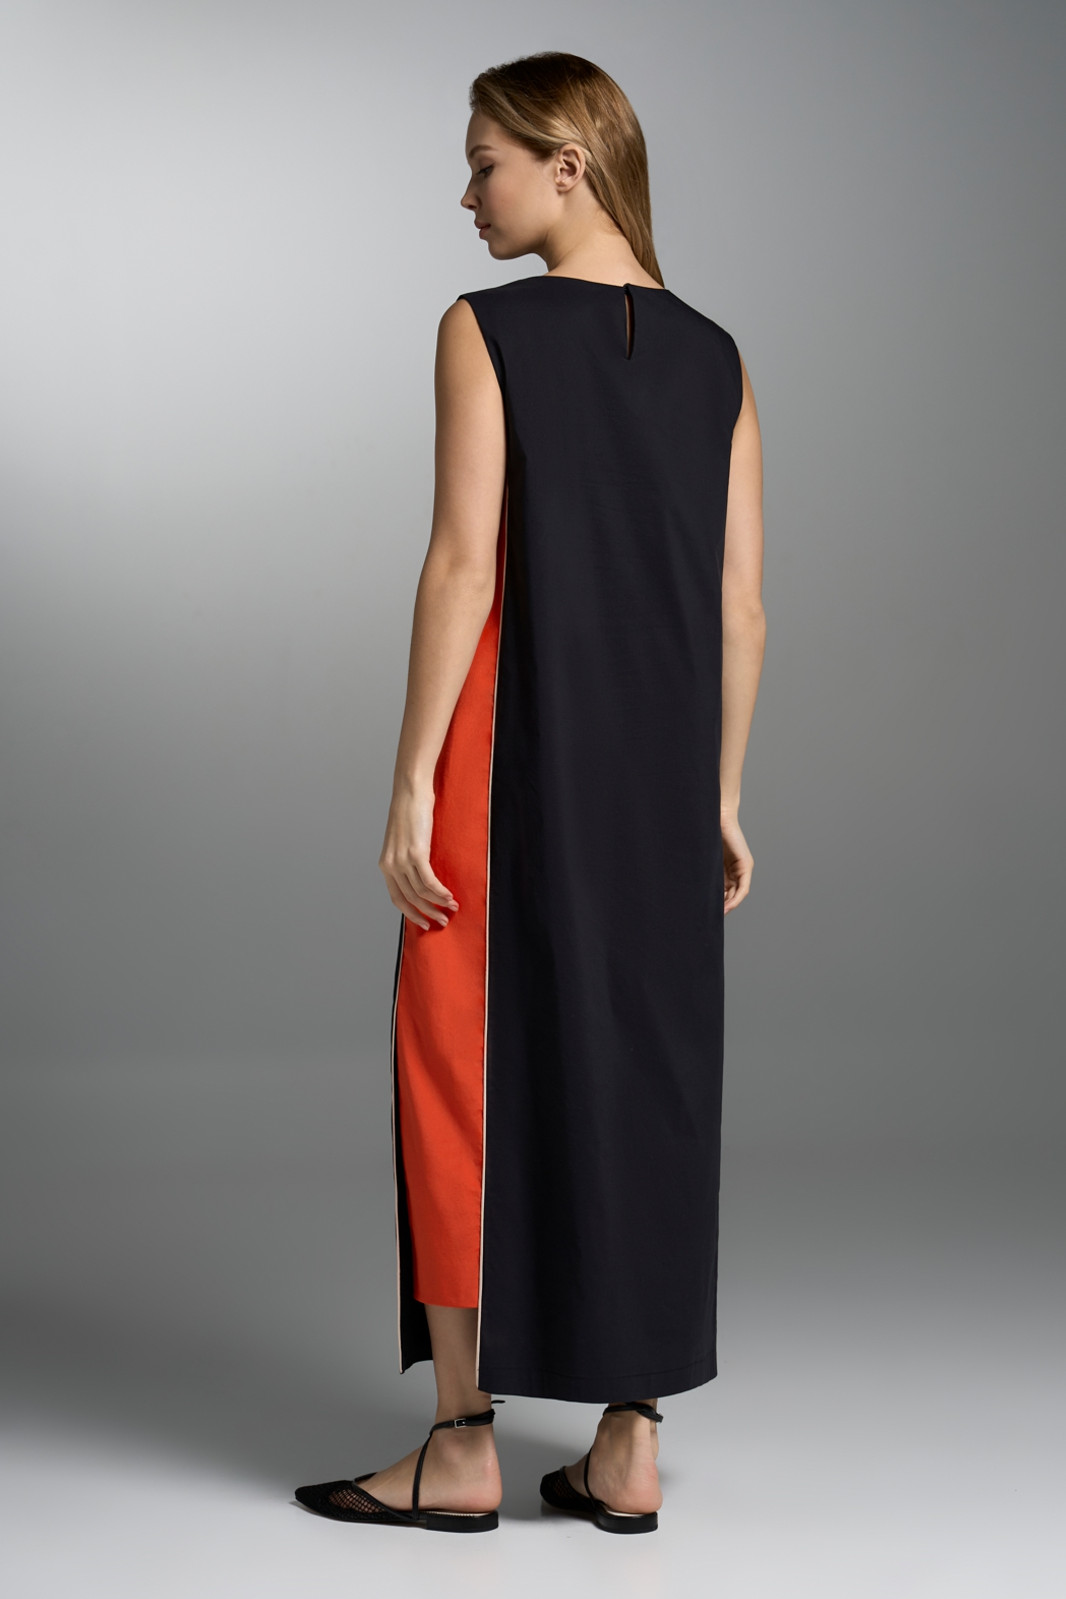 Платье Vi oro VR-1002 черный, оранжевый